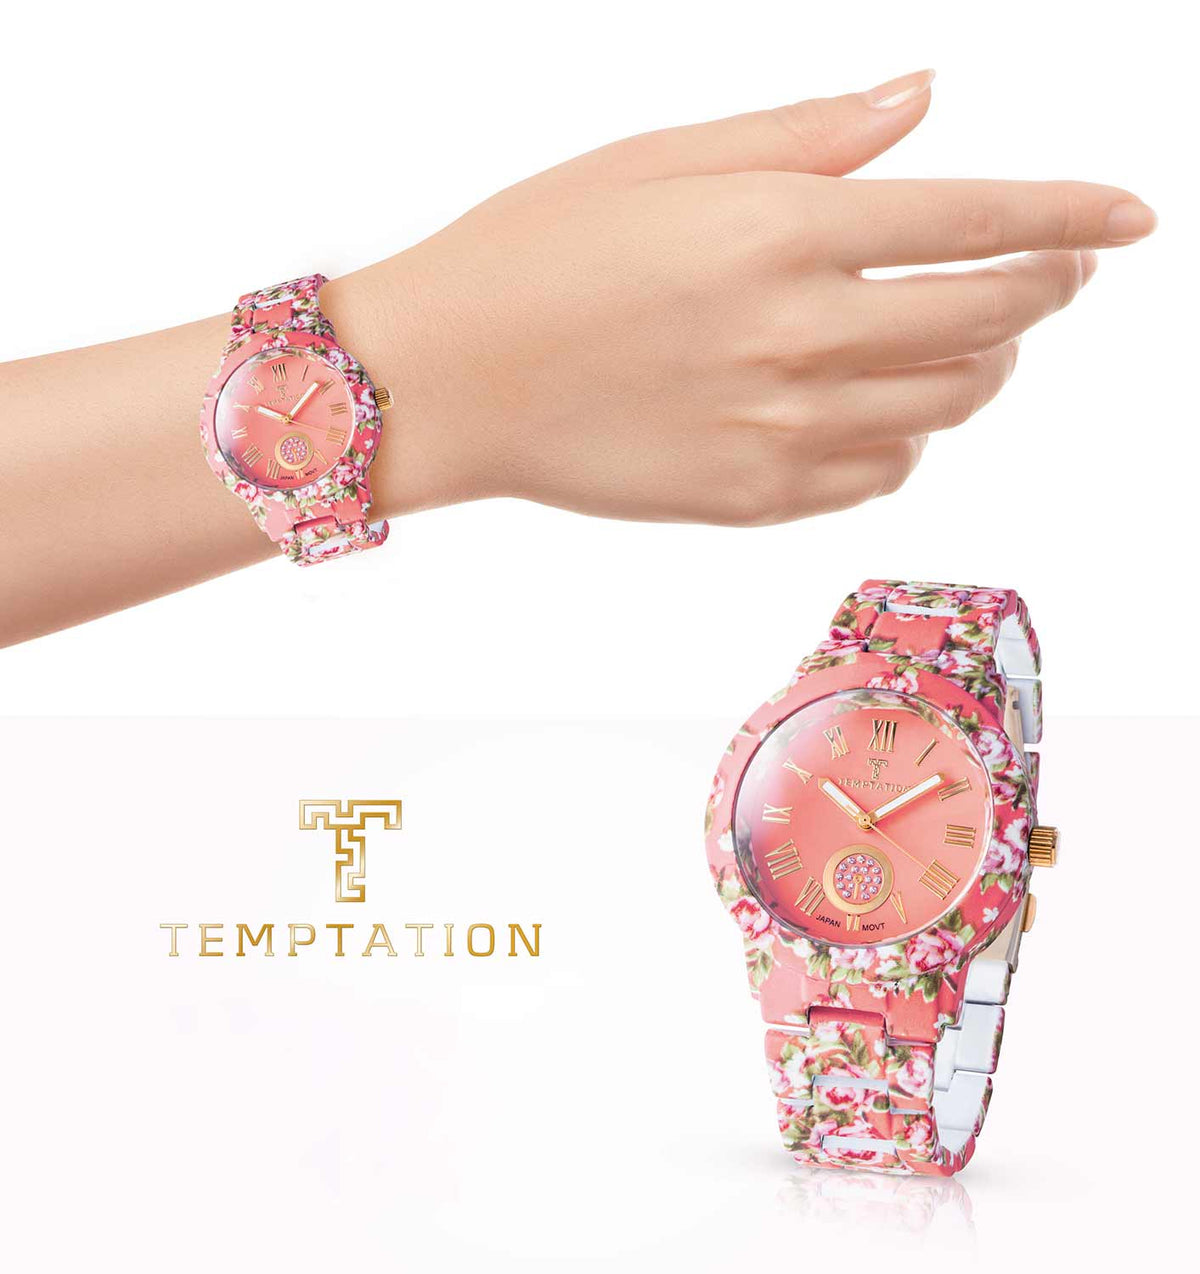 TEMPTATION Damen Marken-Damen-Armbanduhr, rosé-bunt